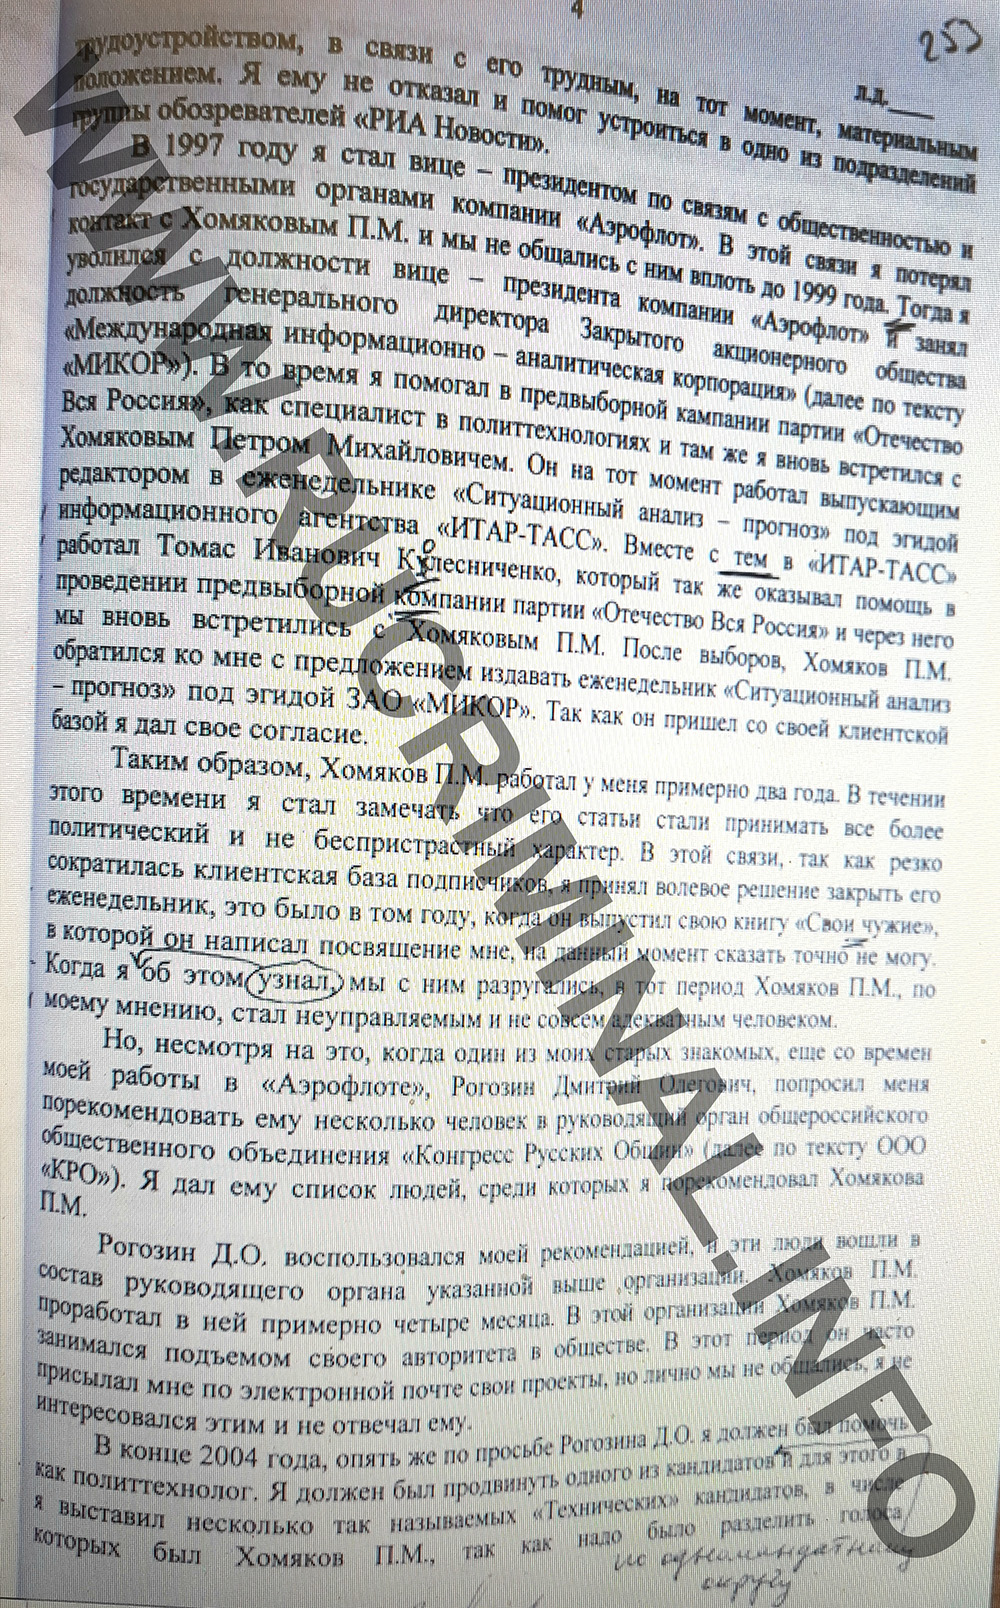 1655115365 524 Rogozin and the velvet revolution Rogozin and the "velvet revolution"